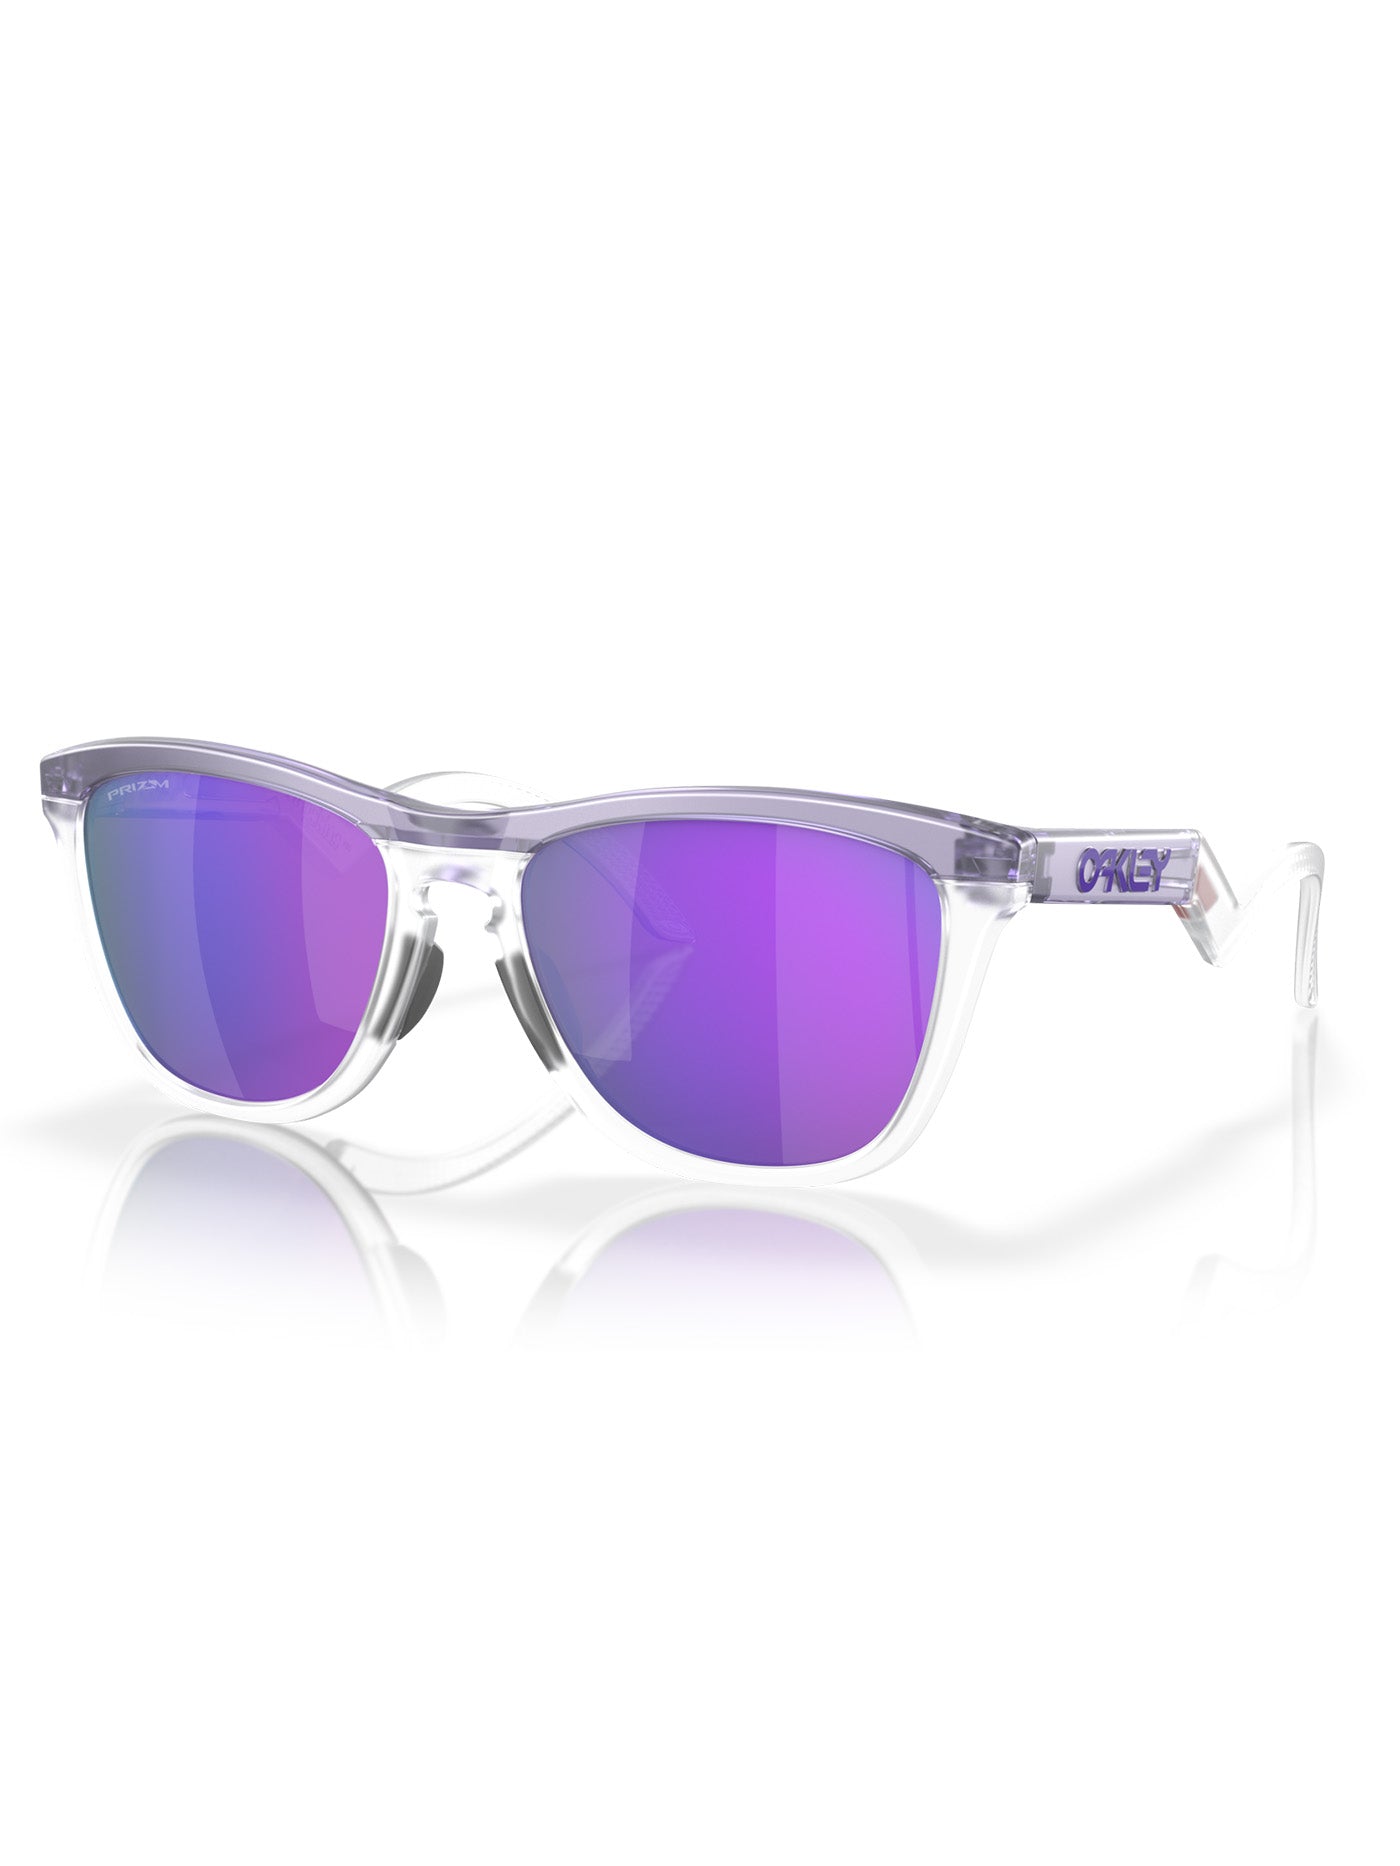 Frogskins prizm polarized sunglasses - Oakley - Women